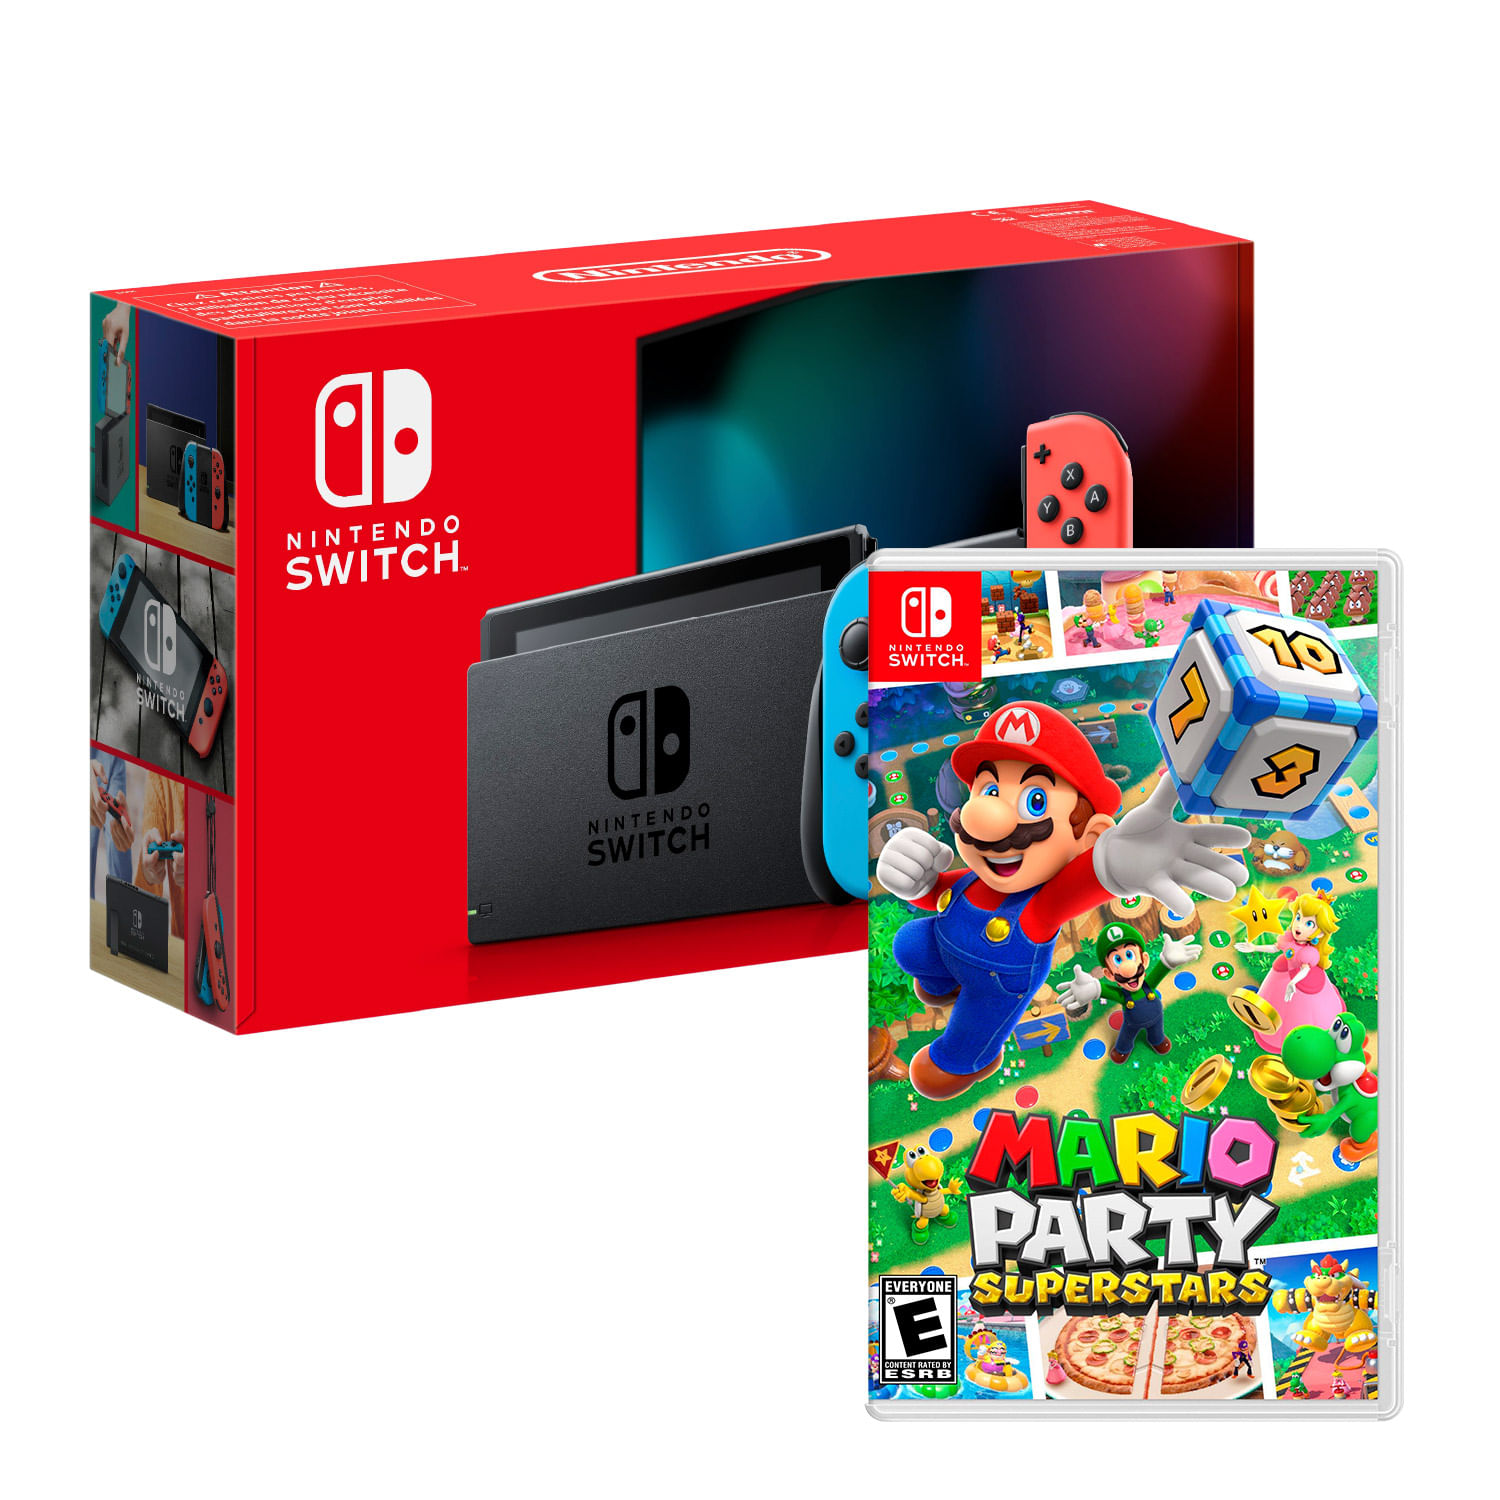 Consola Nintendo Switch Neon 2019 + Mario Party Superstar